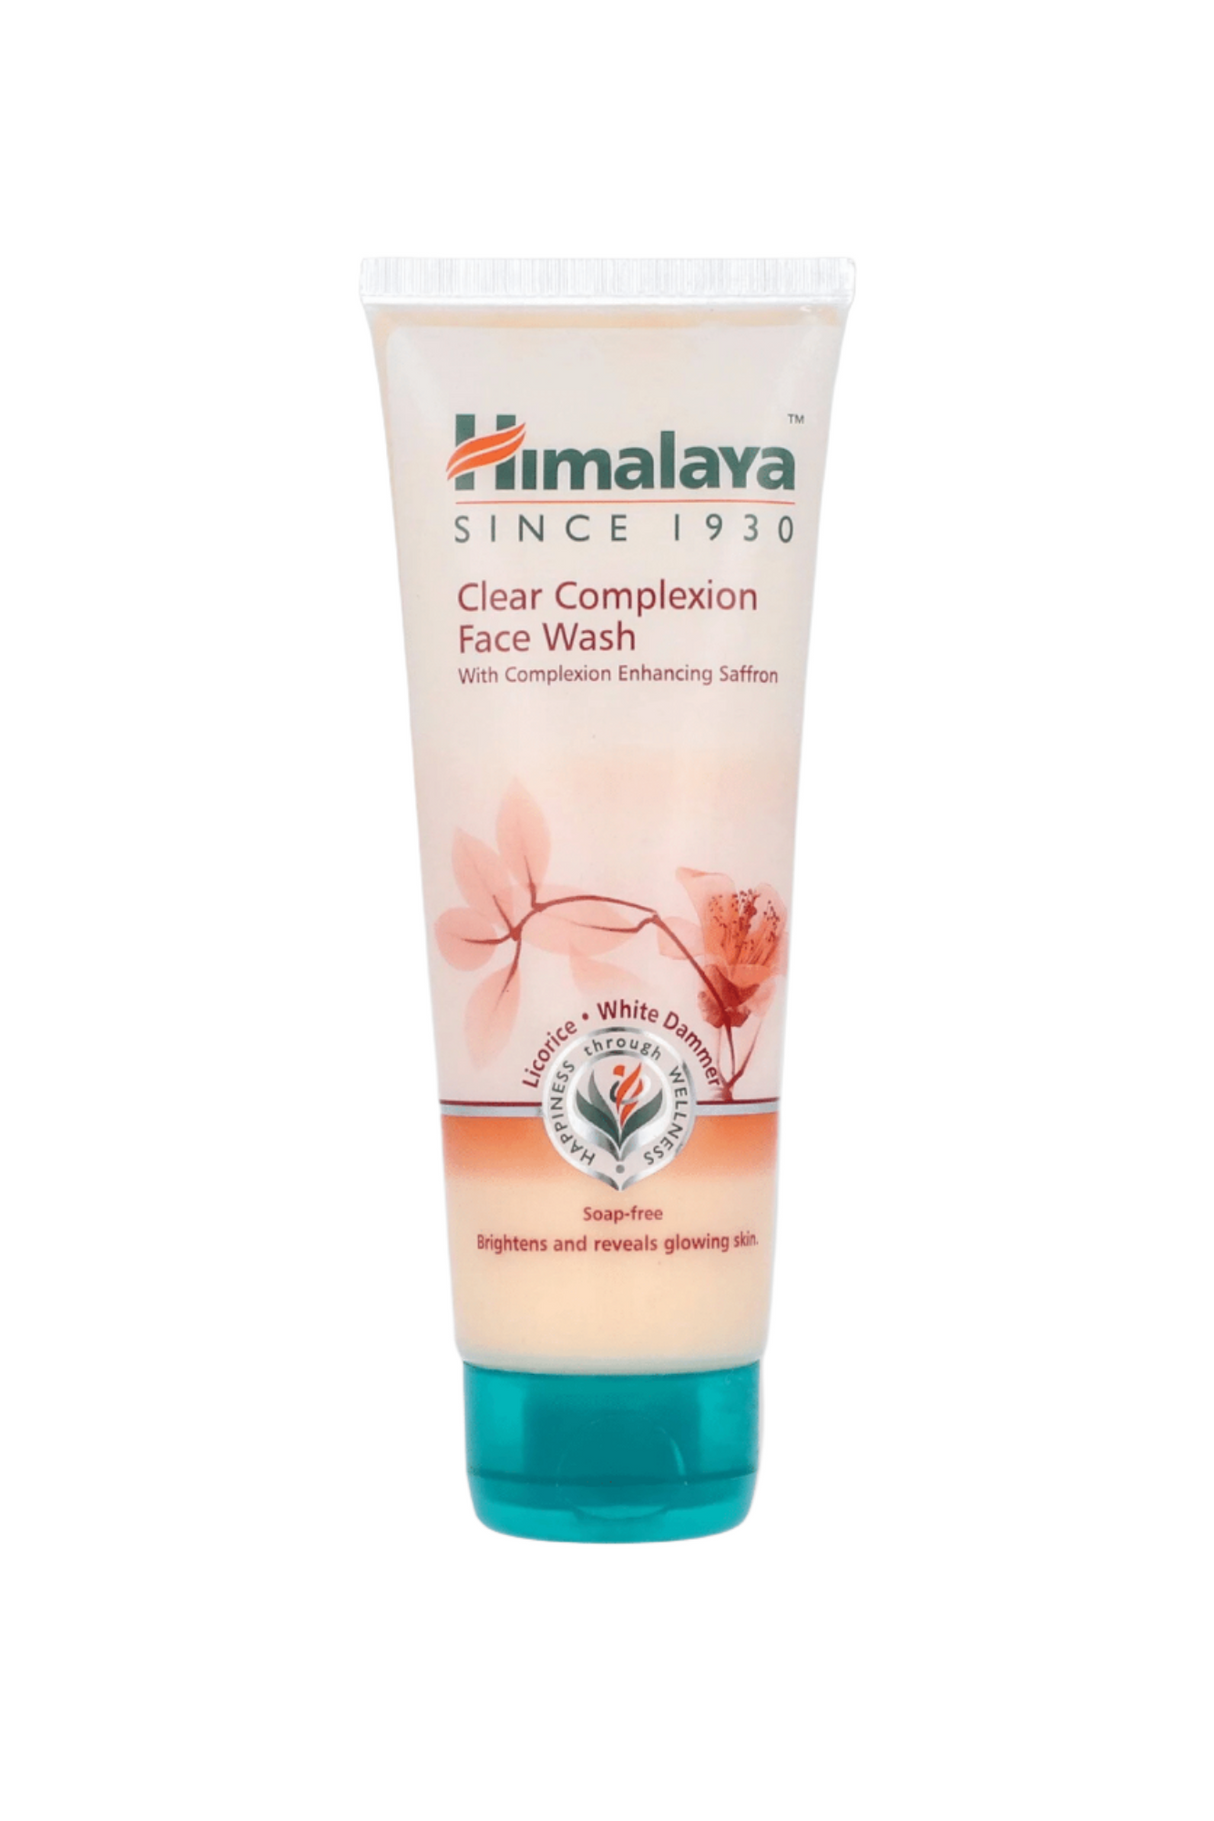 himalaya face wash clear complexion 100ml